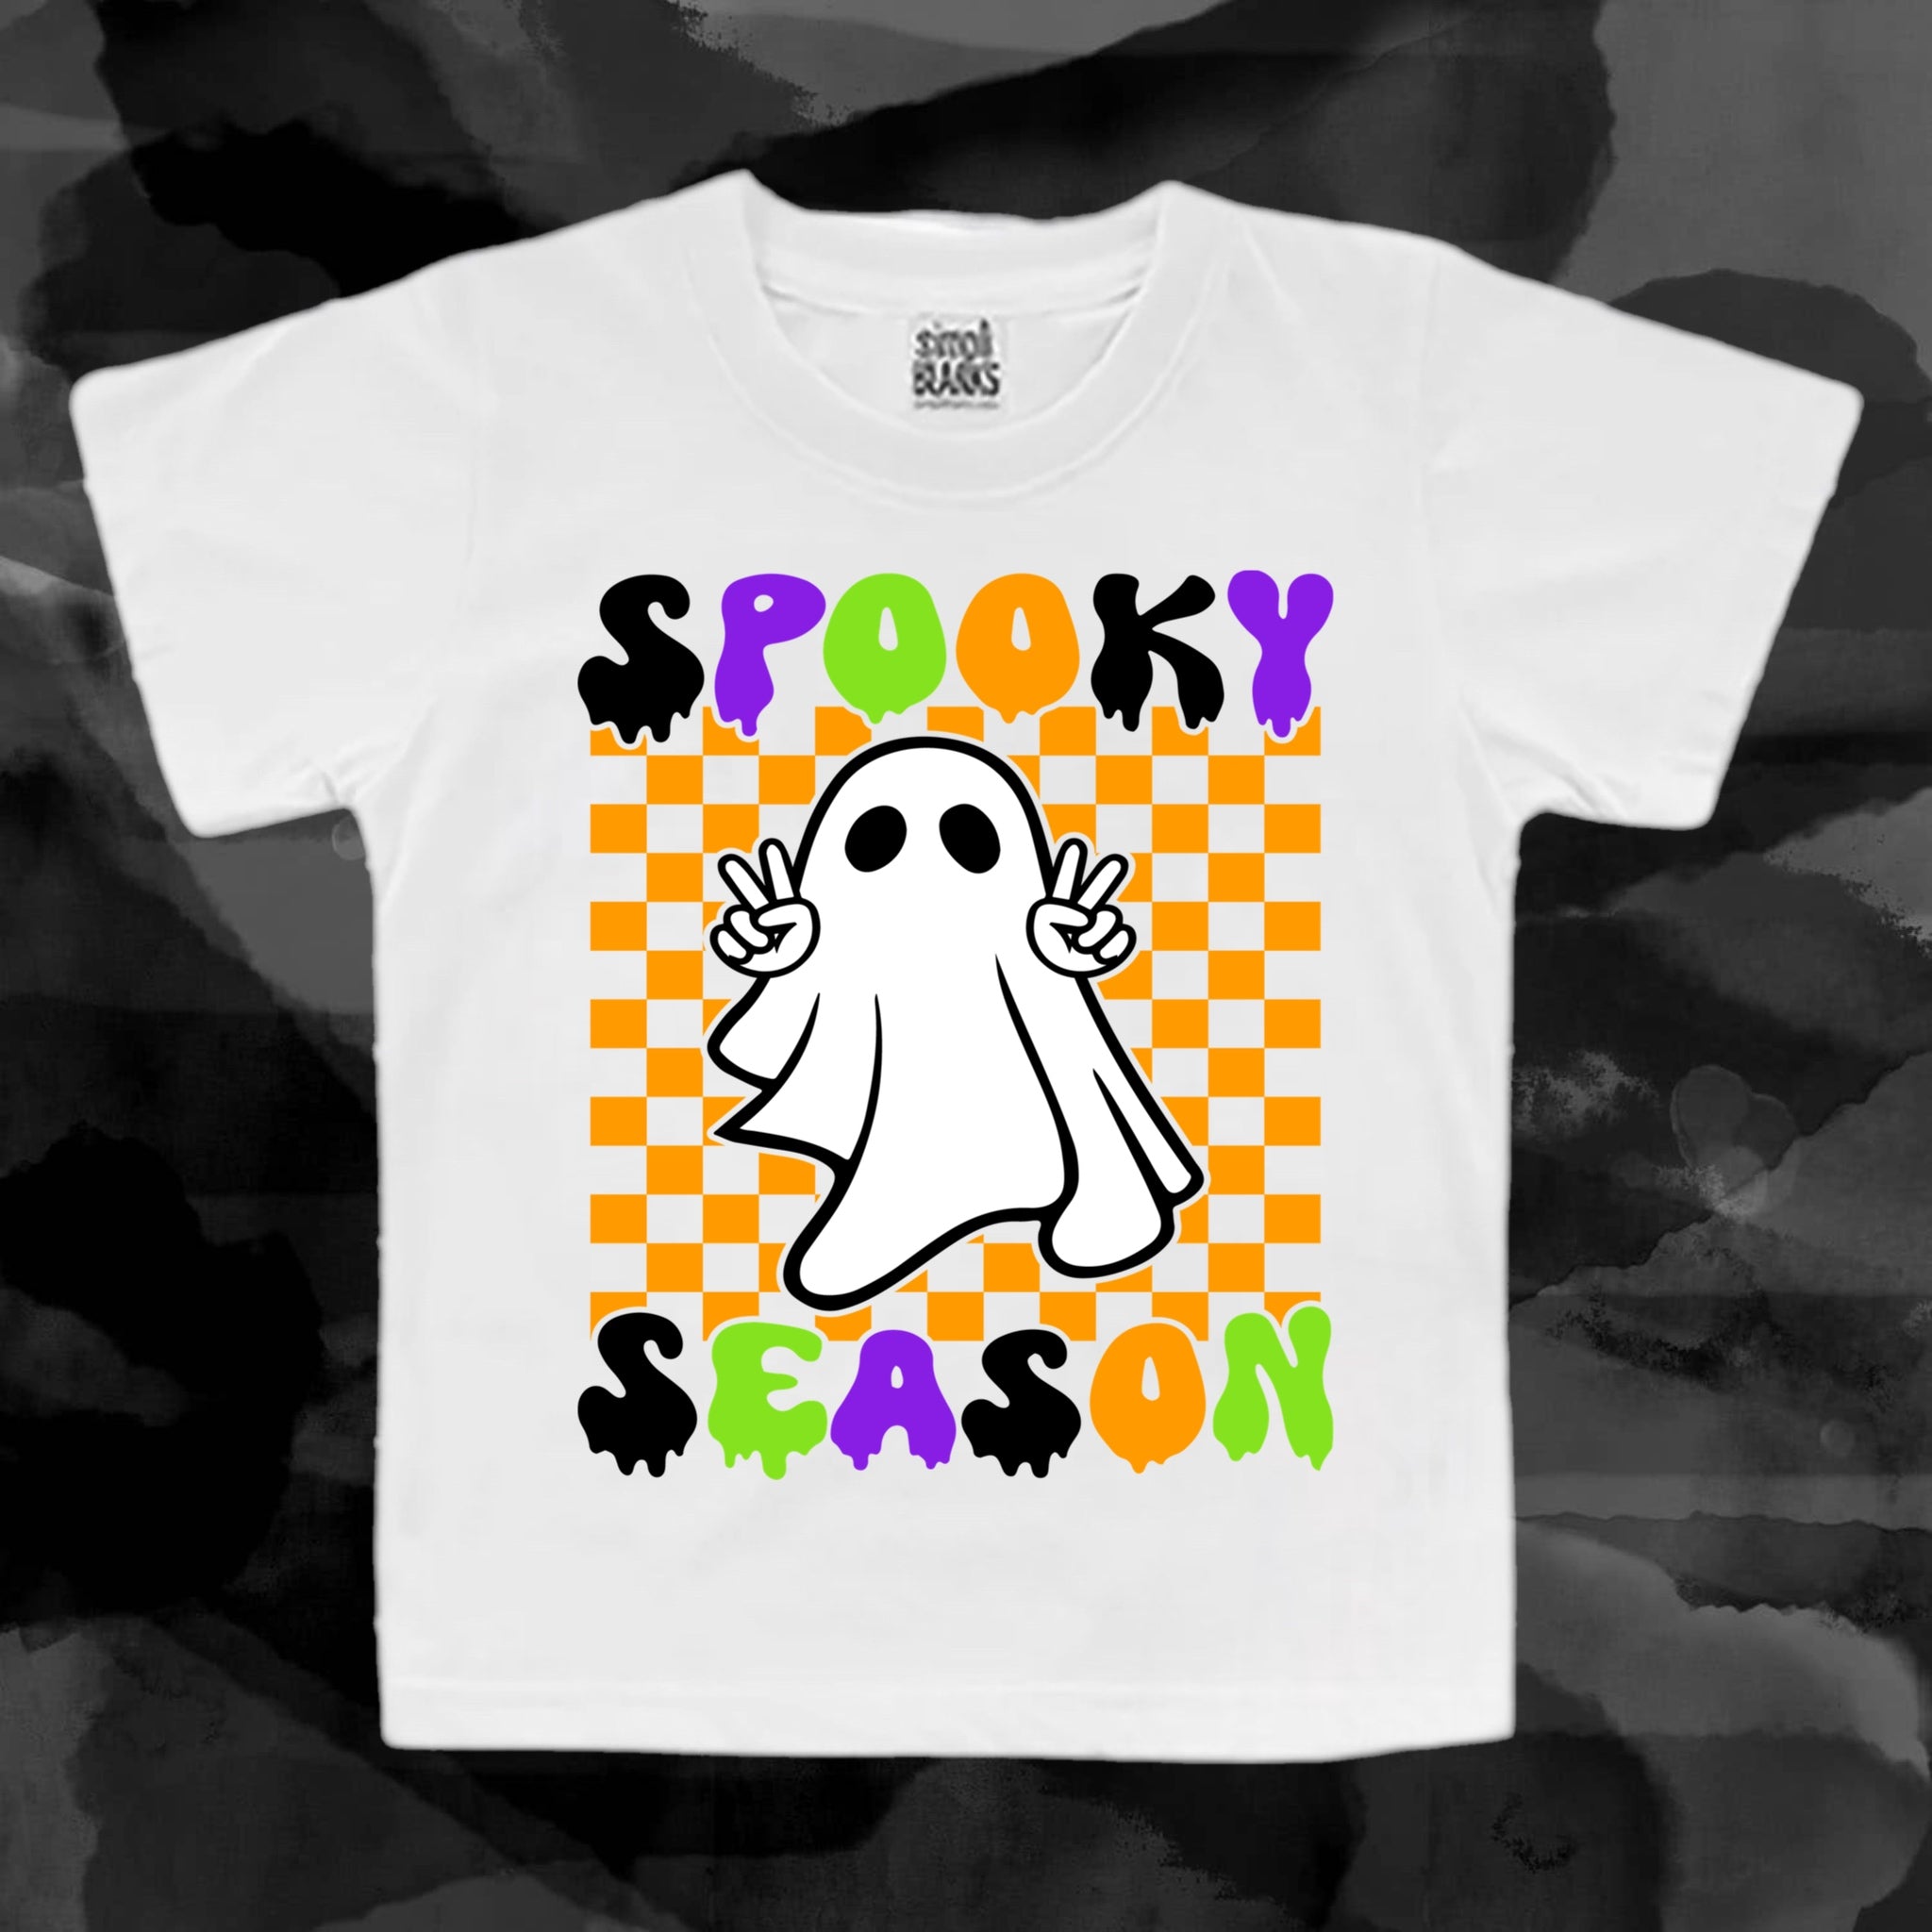 Spooky season Halloween t-shirt